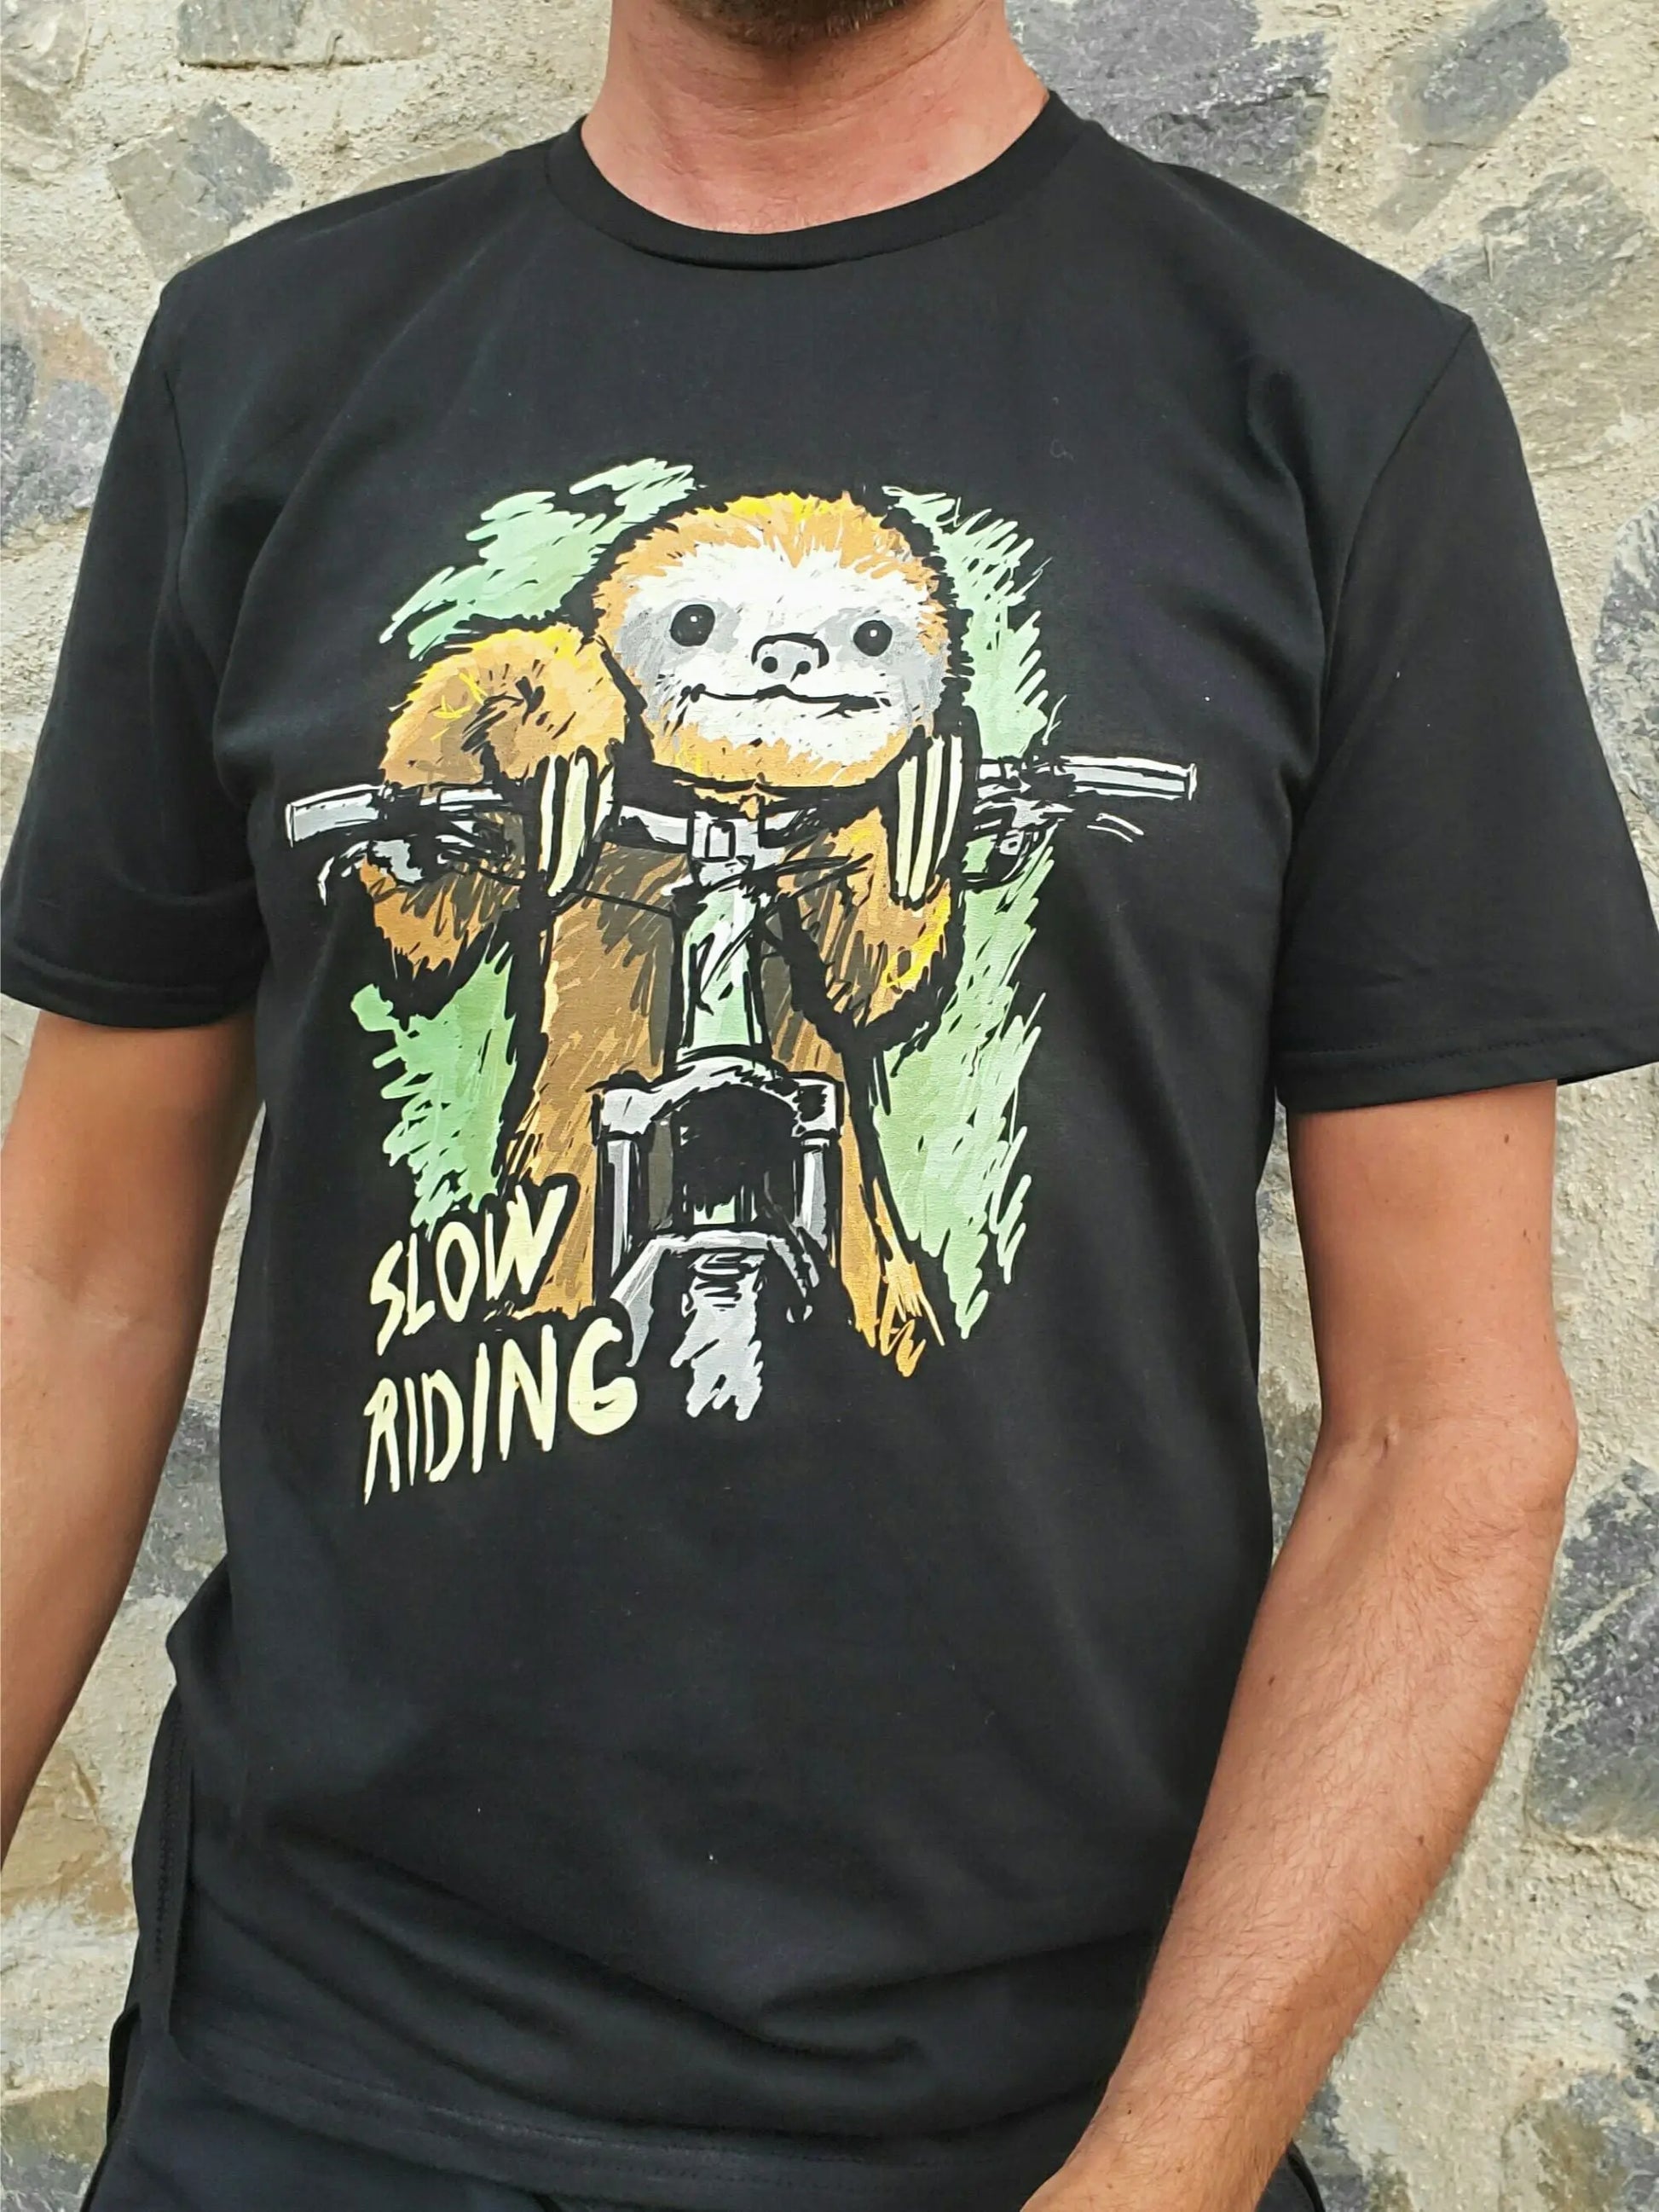 Slow Riding Sloth on Mountain Bike T-Shirt - Geeks'n'Gears - bicycle bike biking